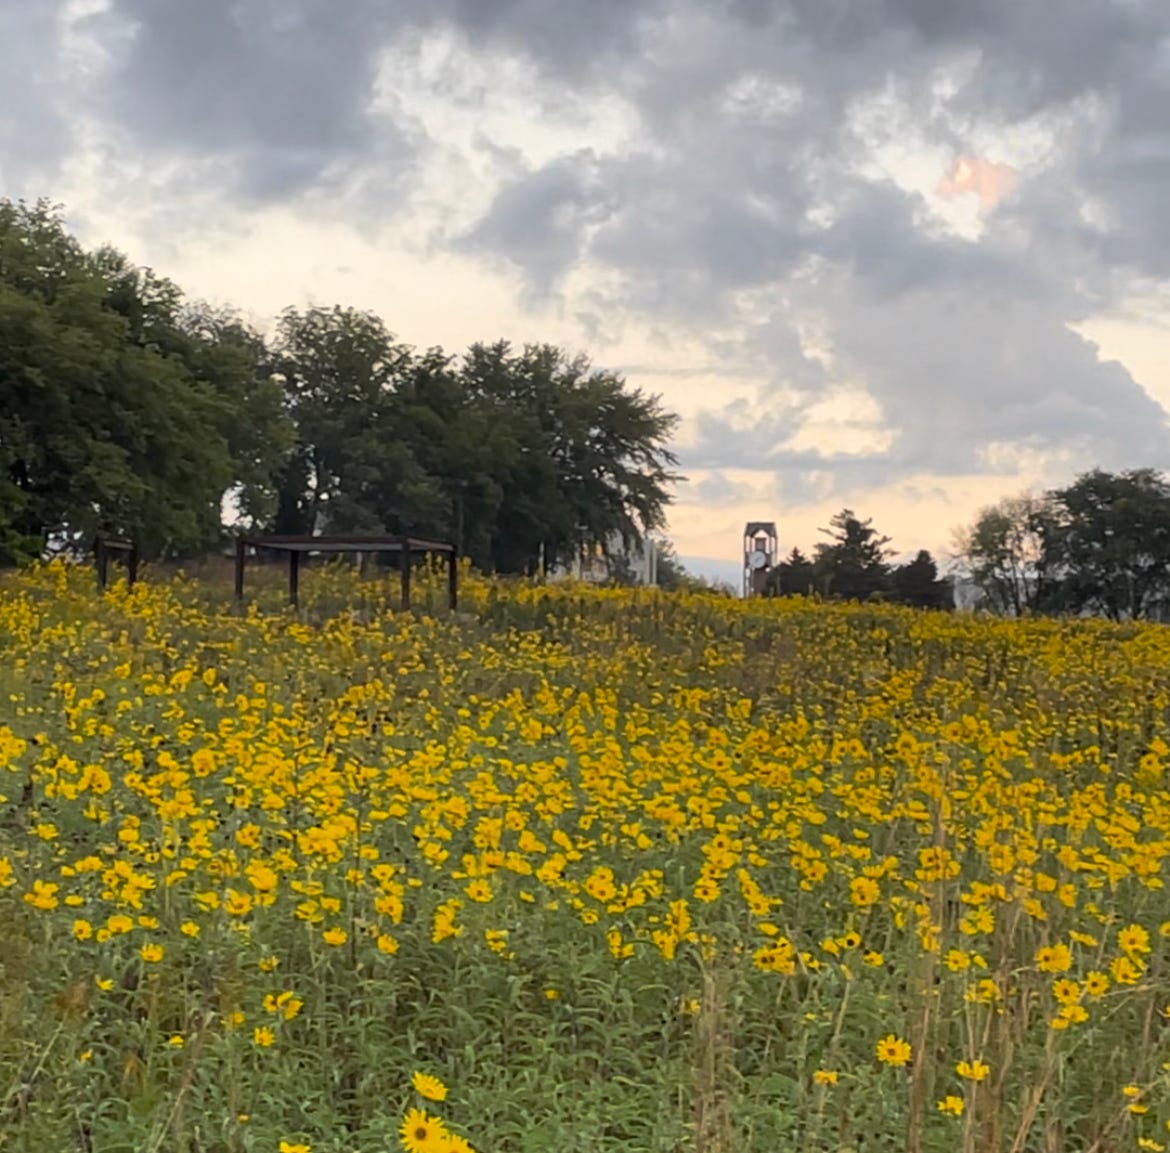 A prairie full of yellow wildflowers